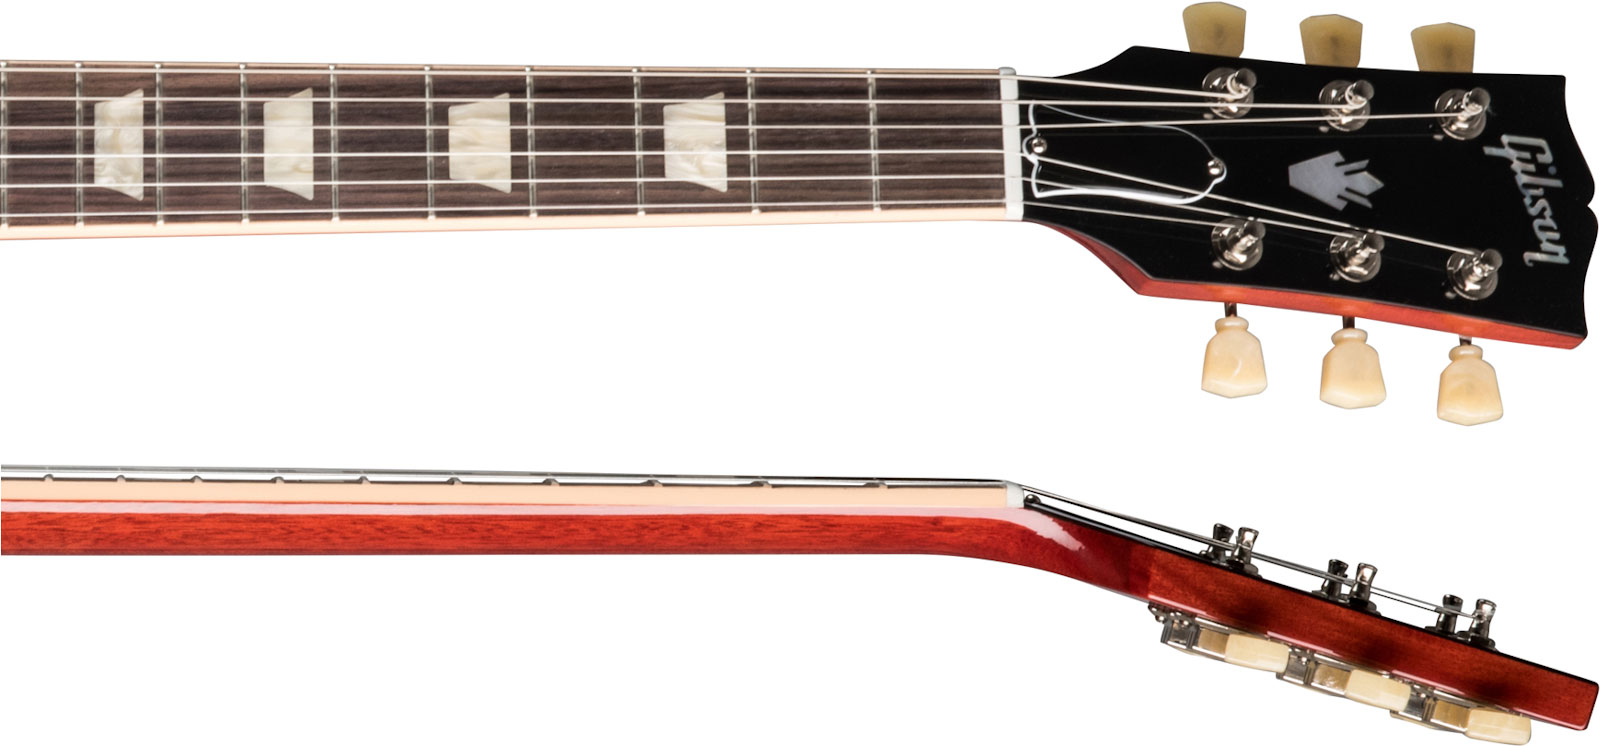 Gibson Sg Standard '61 2h Ht Rw - Vintage Cherry - Retro rock electric guitar - Variation 3